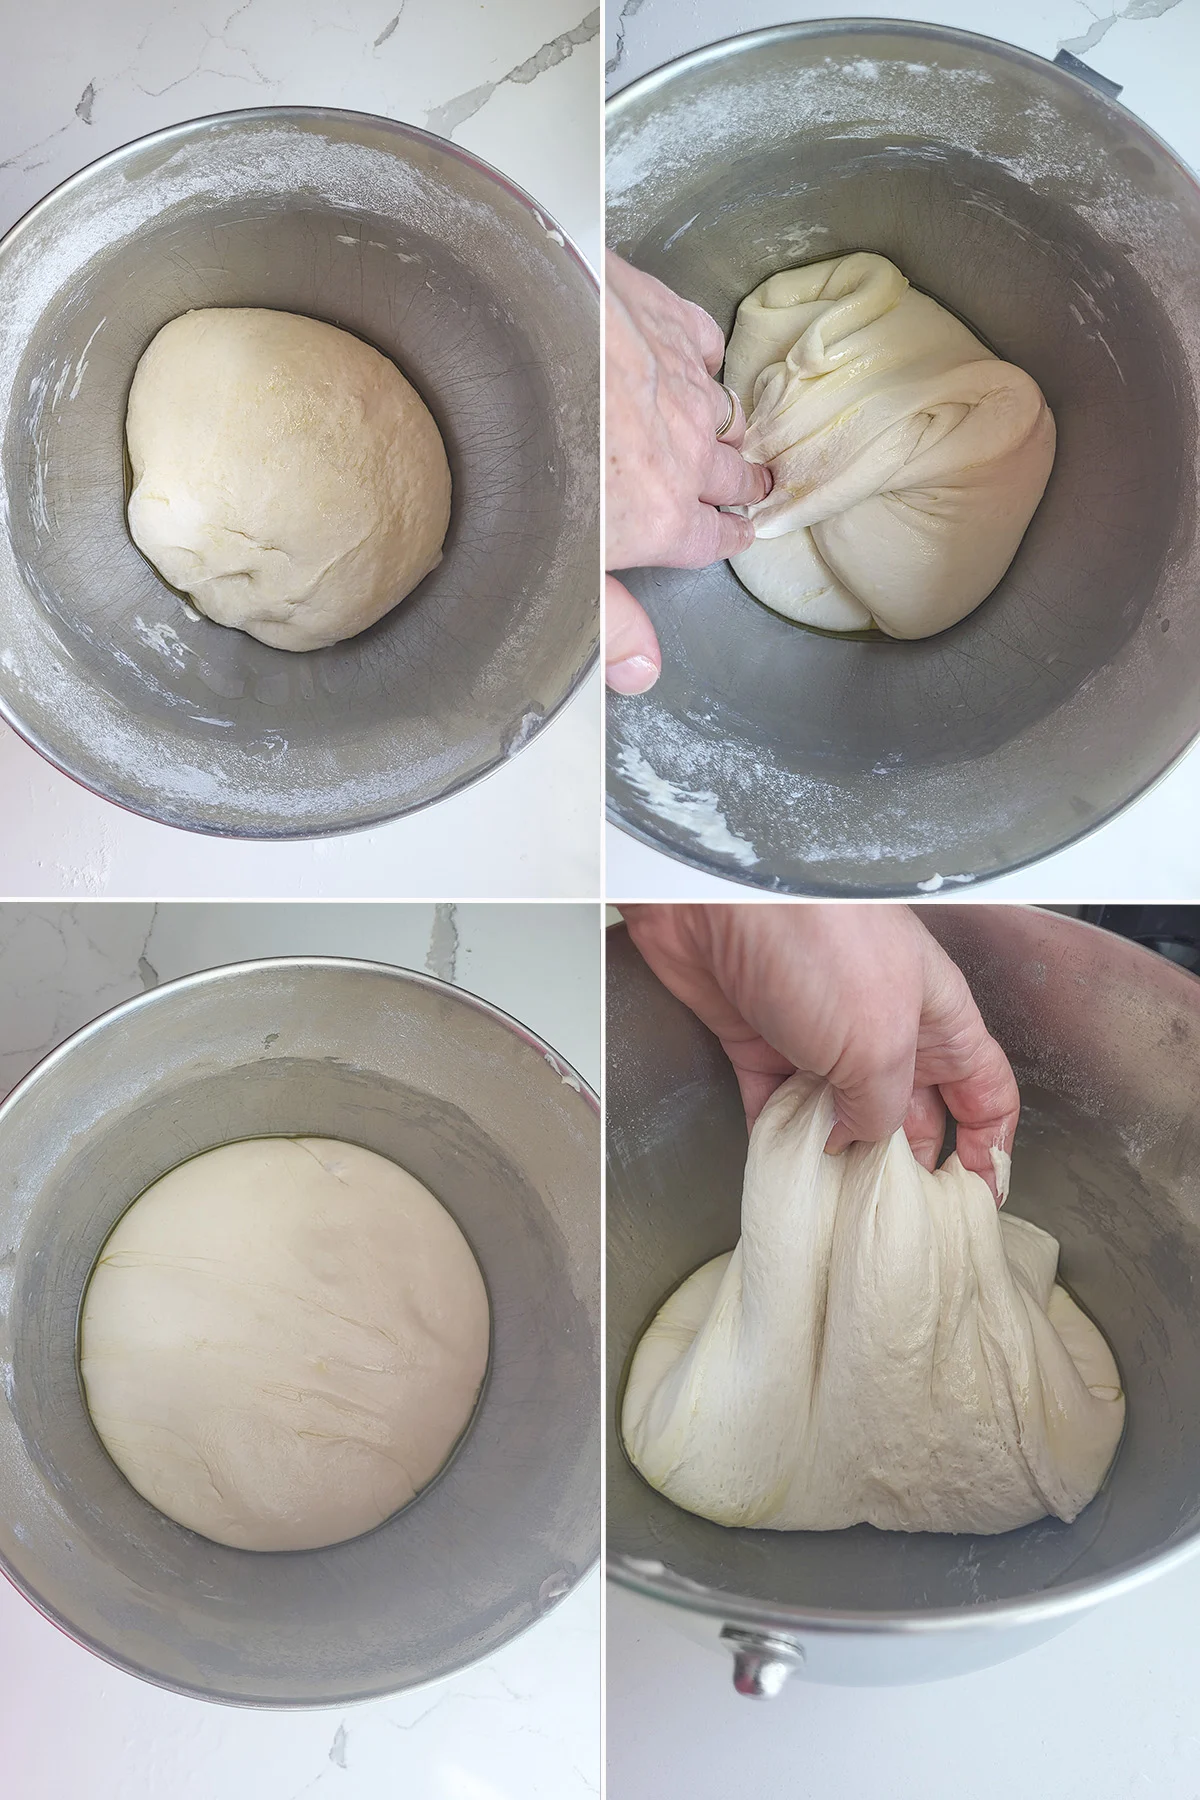 Pizza dough in a bowl shown 4x.